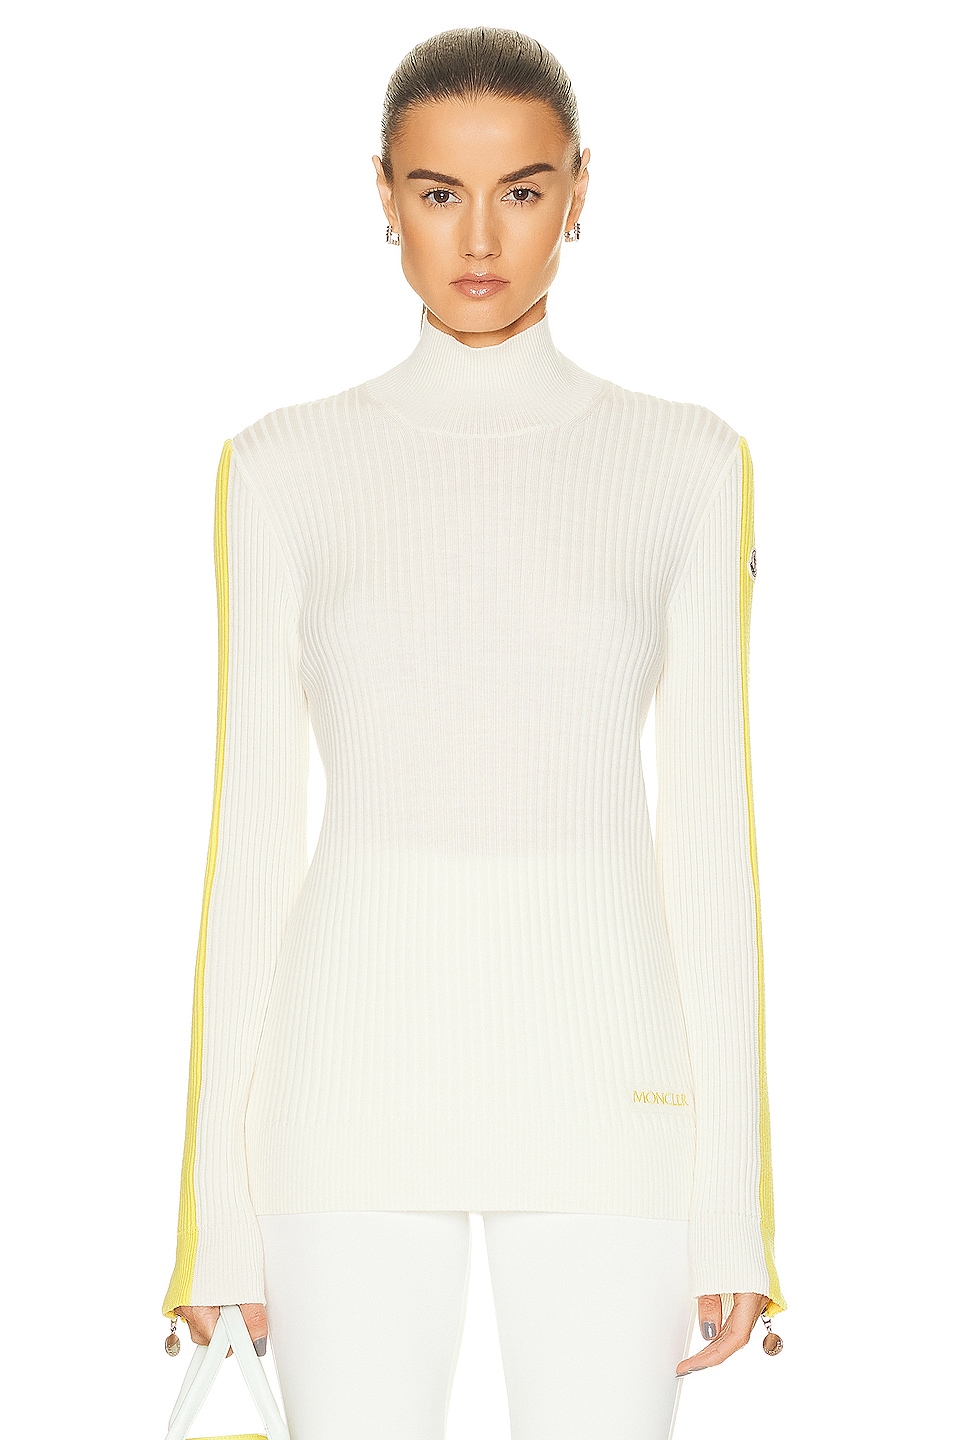 Moncler Turtleneck Sweater in White & Yellow | FWRD